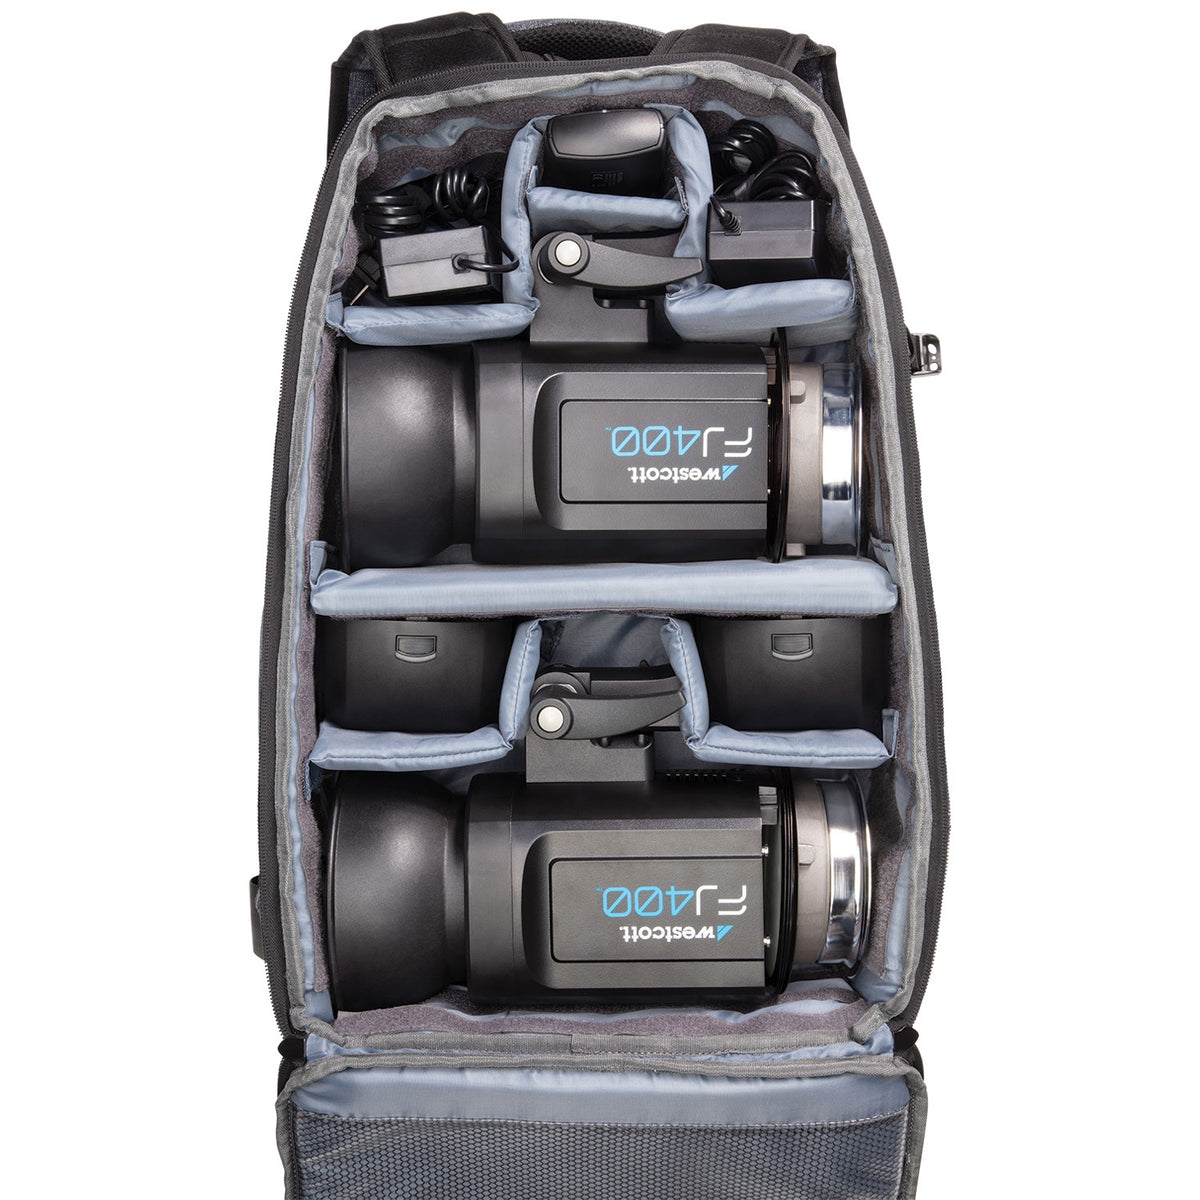 FJ400 Strobe 2-Light Backpack Kit with FJ-X3 M Universal Wireless Trigger